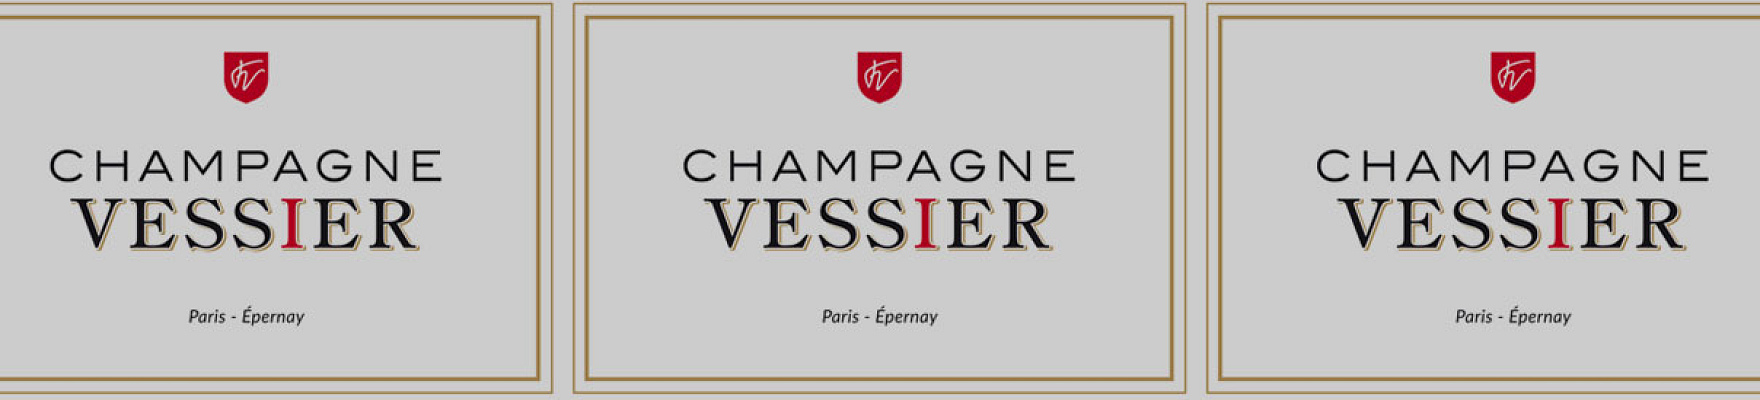 Champagne Vessier